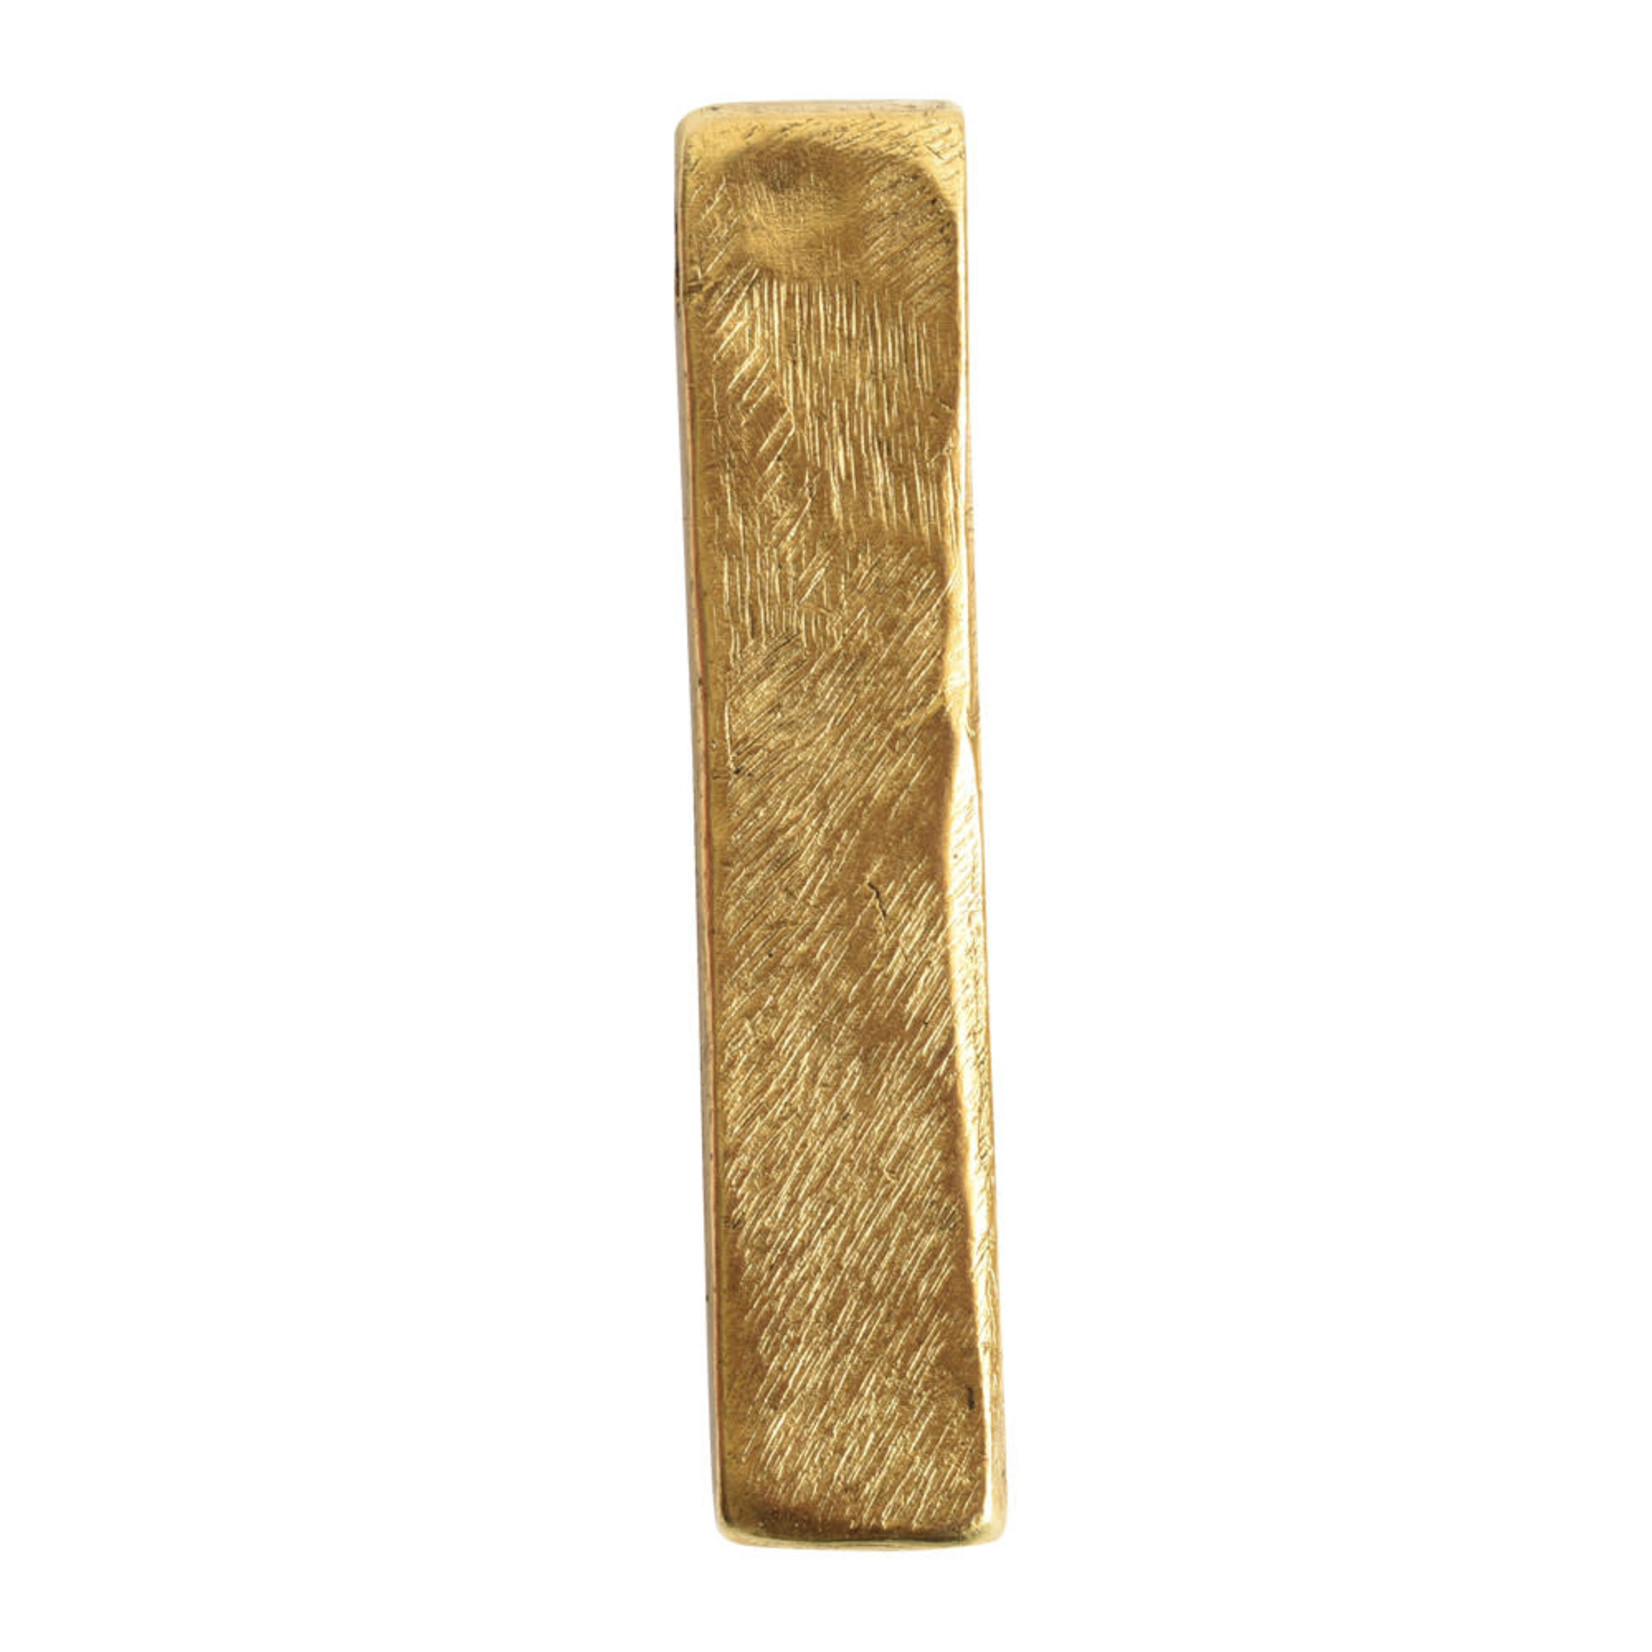 Nunn Design Organic Flat Small Rectangle - Antique Gold